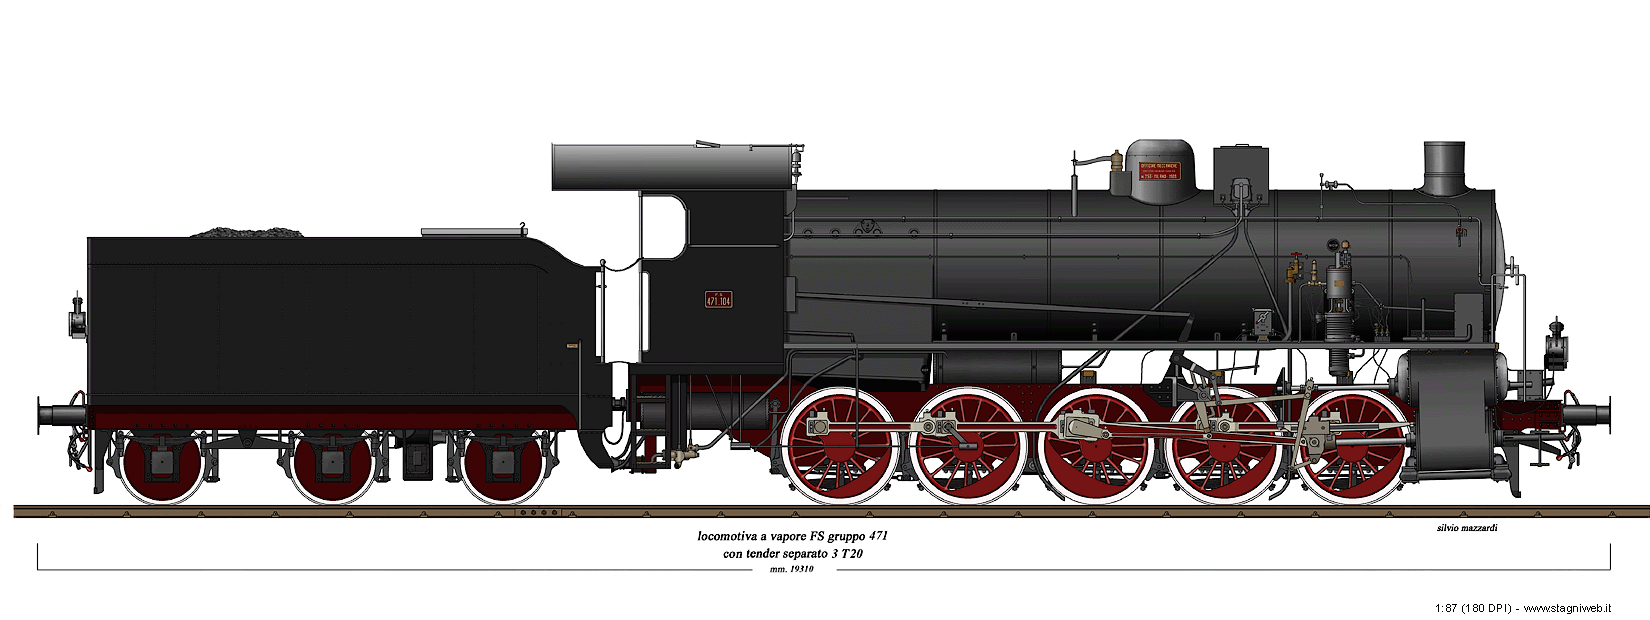 Locomotive a vapore - Gr. 471